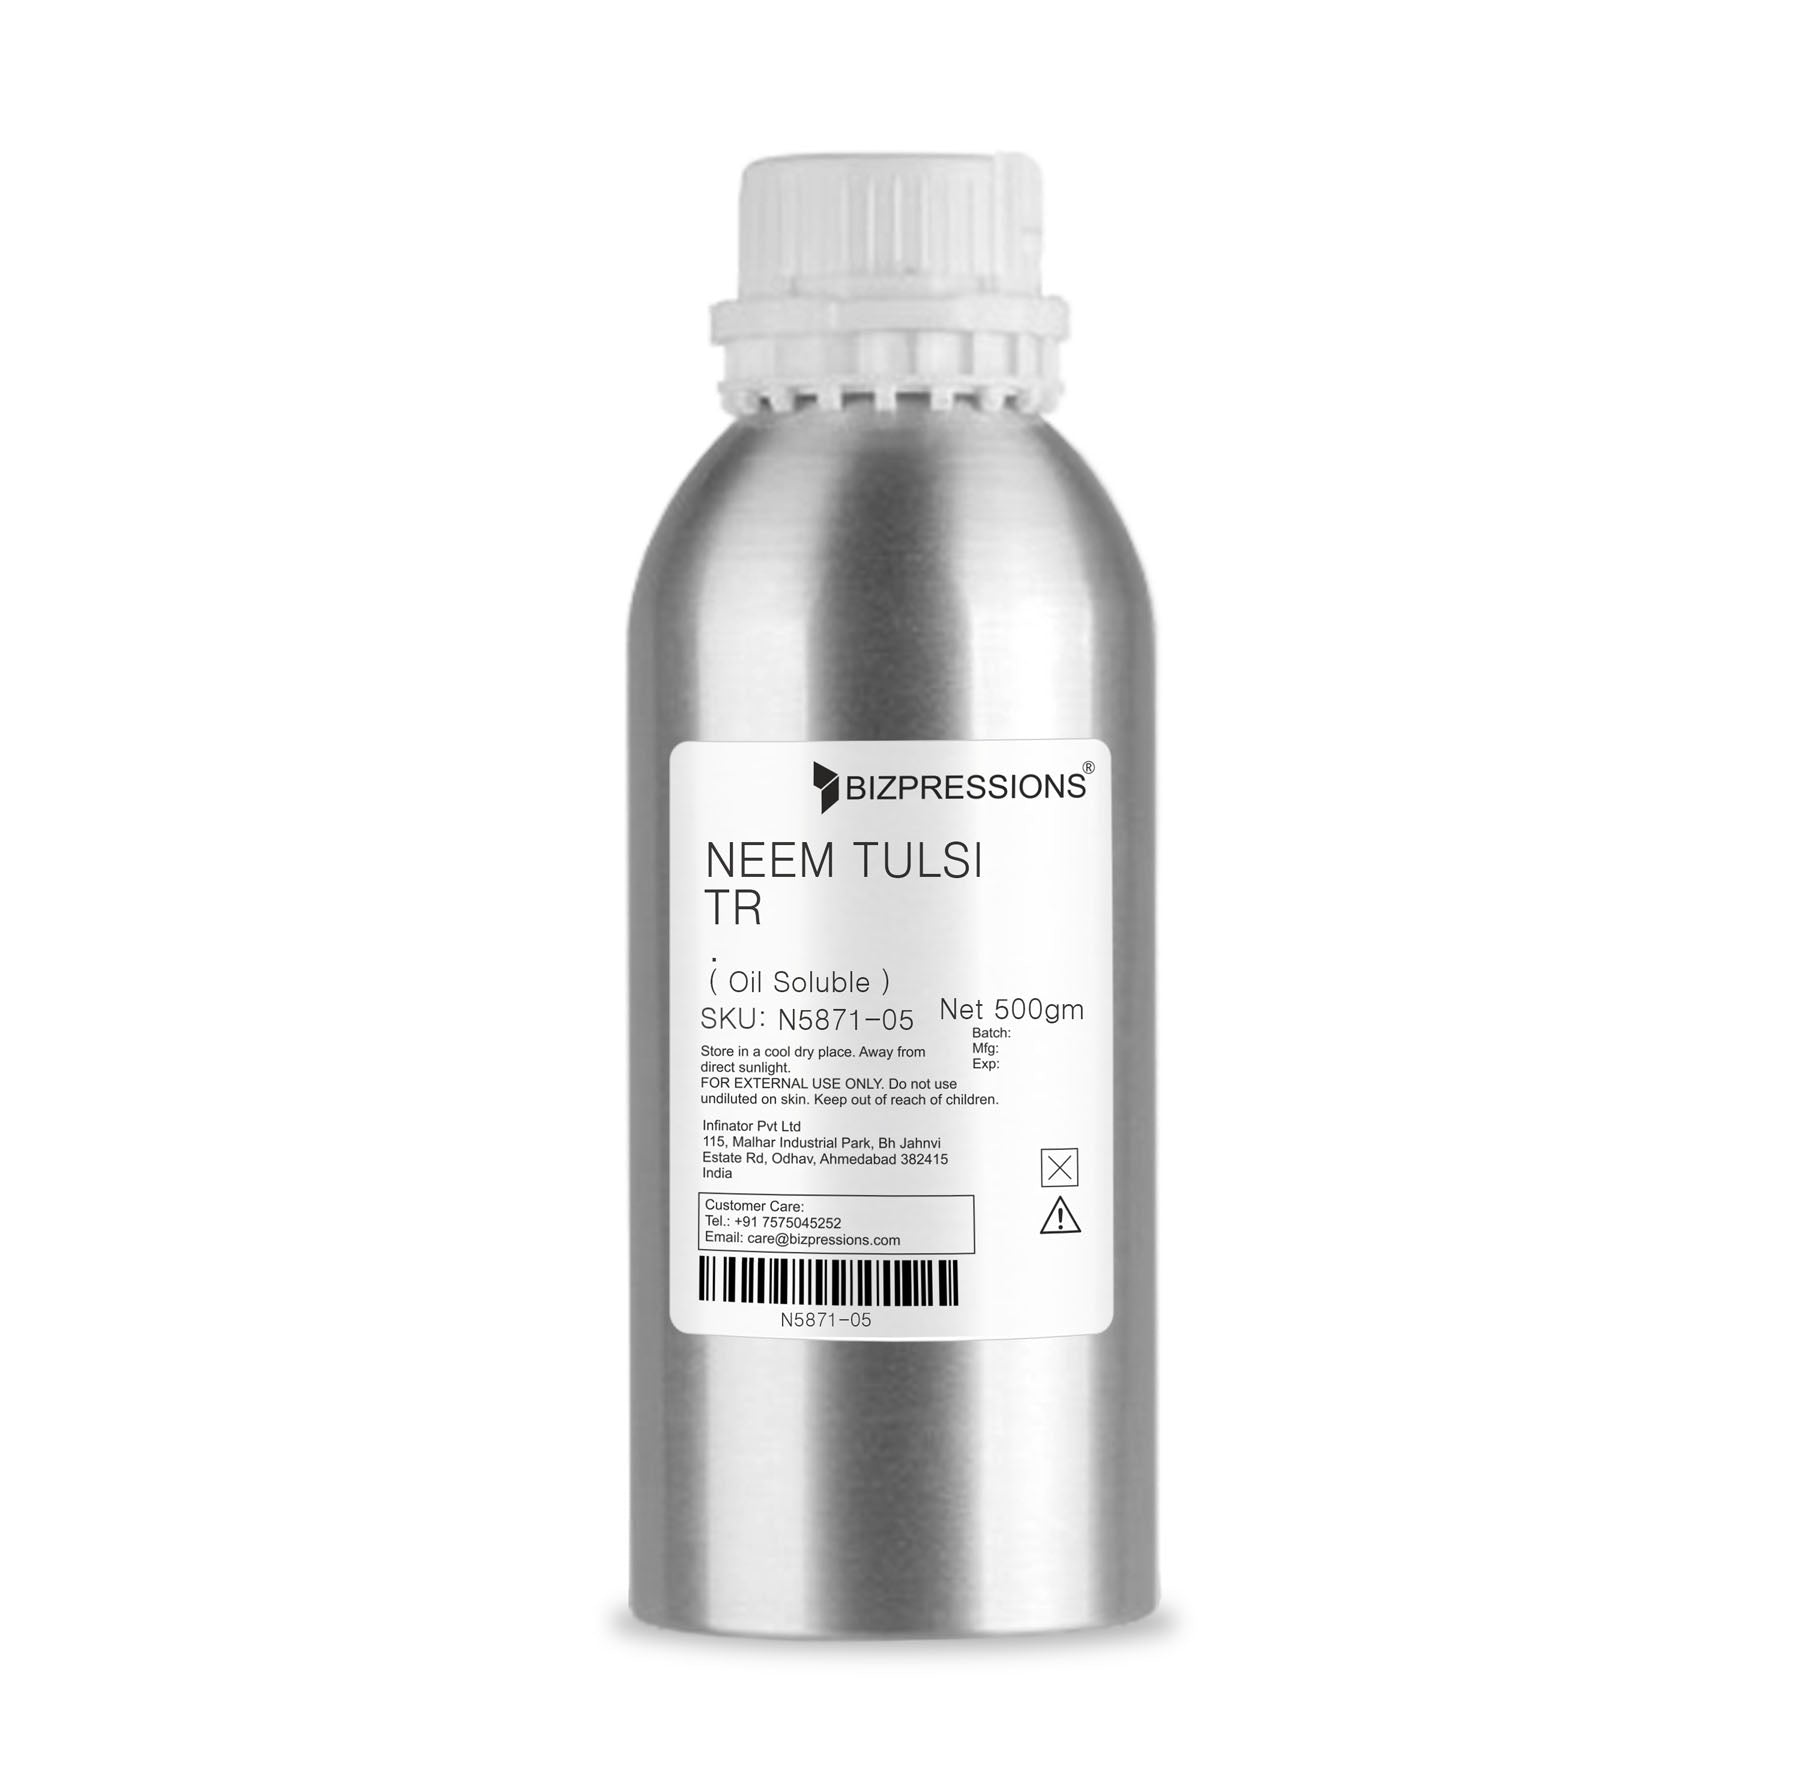 NEEM TULSI TR - Fragrance ( Oil Soluble ) - 500 gm